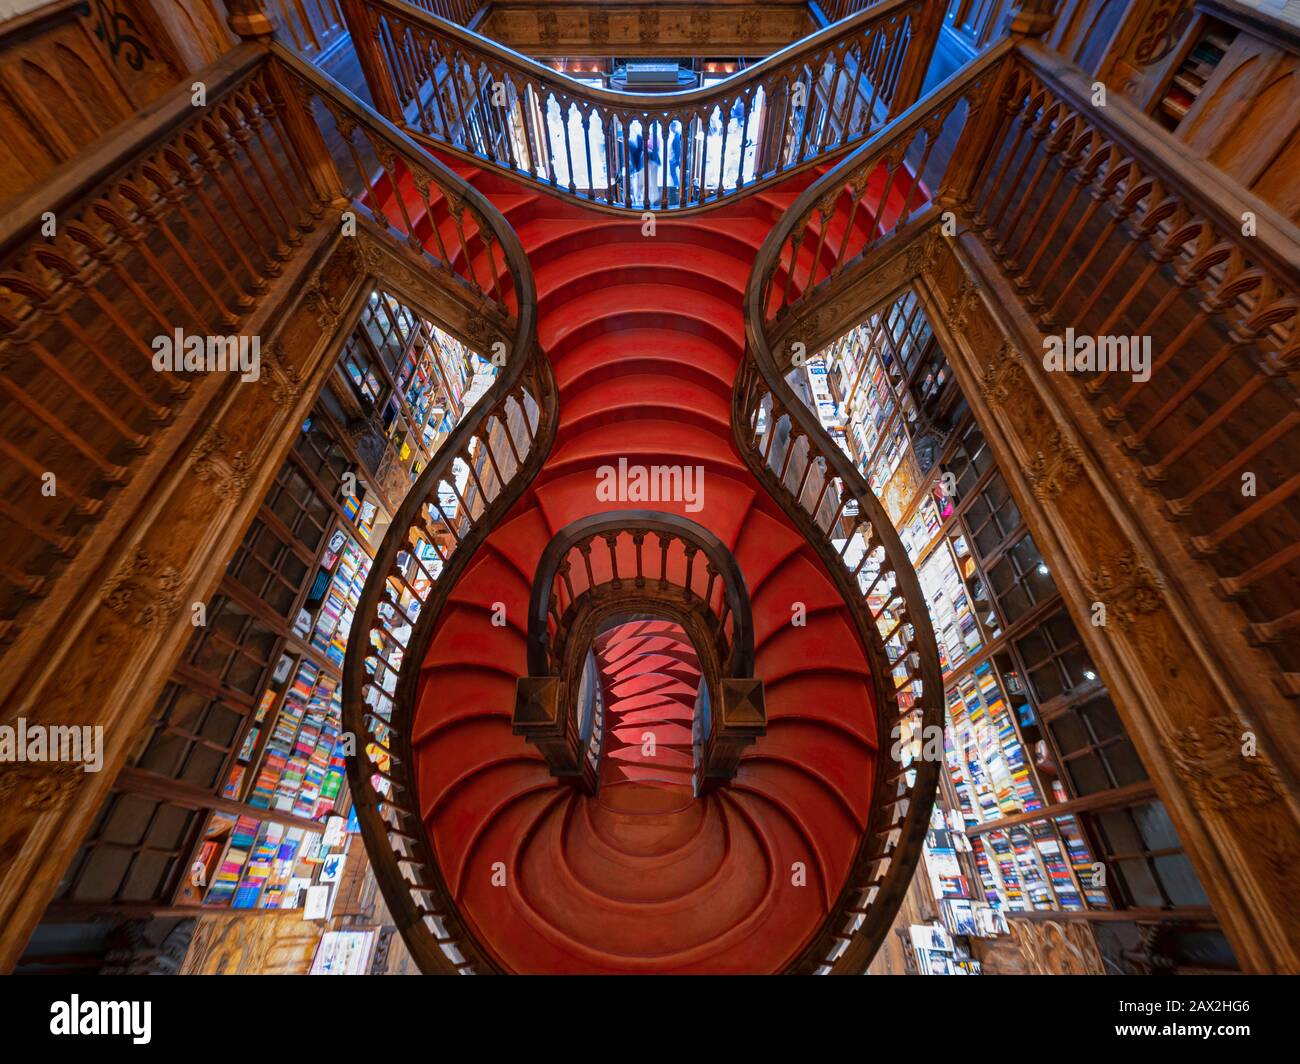 Interiors of Lello Bookstore (Portuguese: Livraria Lello) showing its famous wooden staircase in the Historic Center of Porto, Portugal. Stock Photo